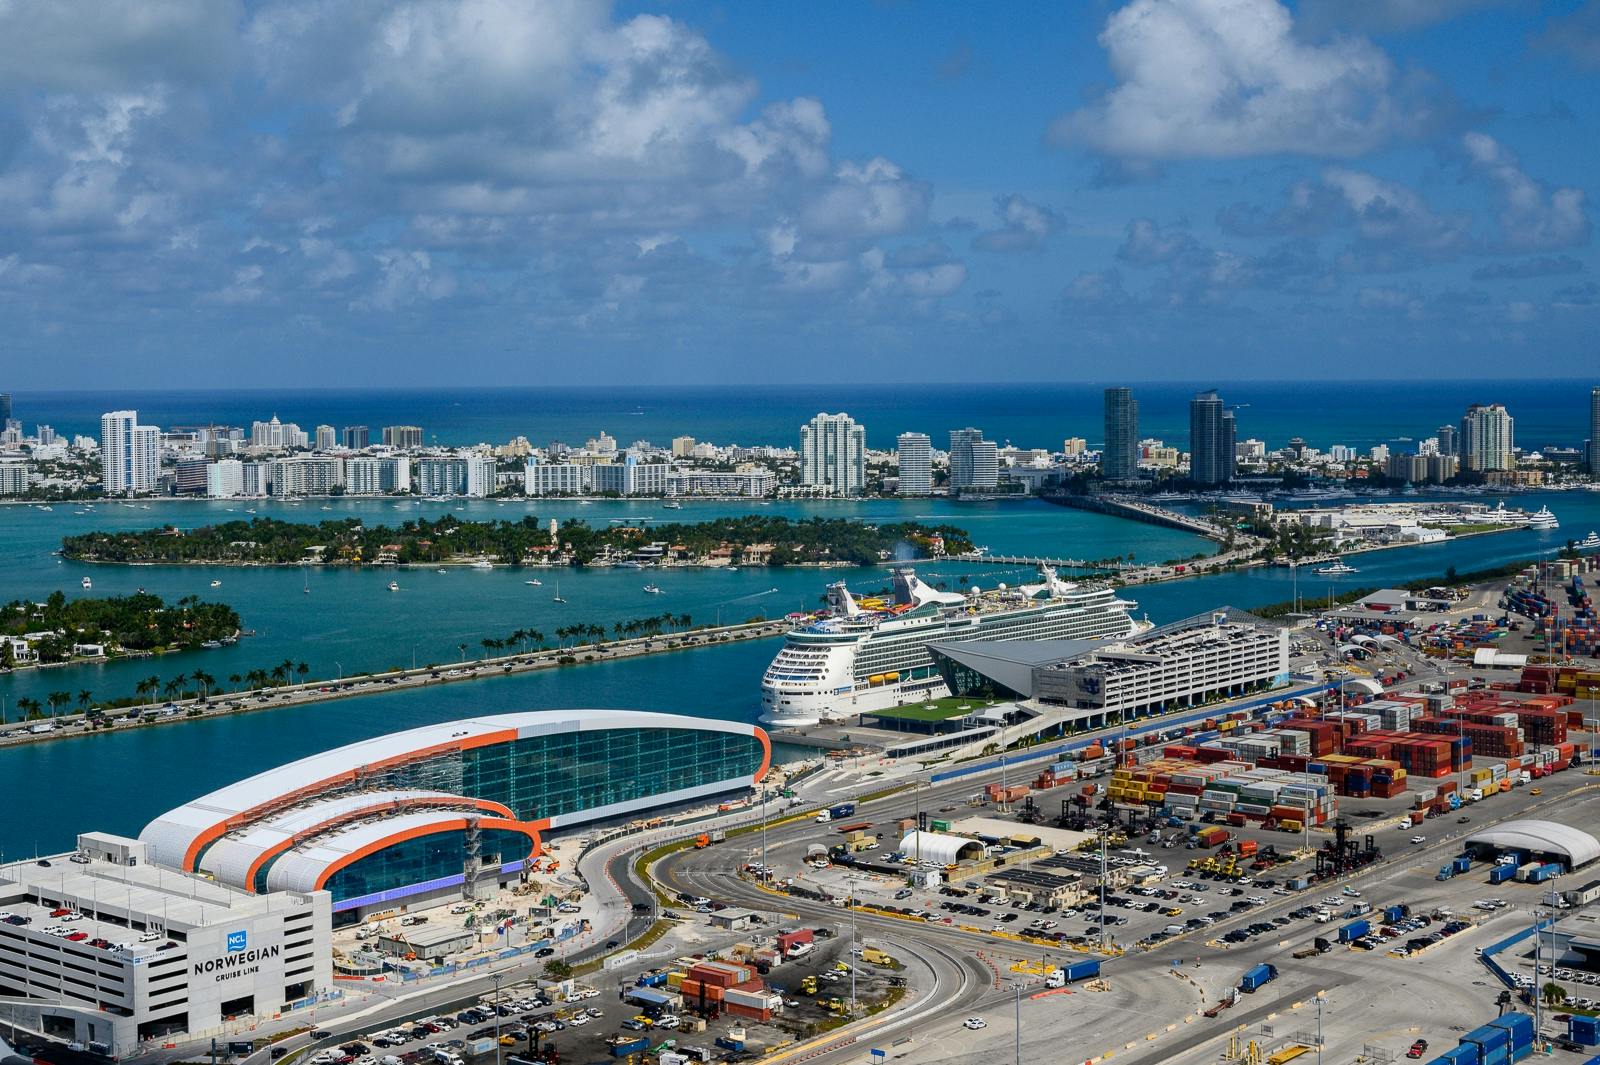 Vistas do oceano e da cidade passeio de helicóptero de 1 hora saindo de Fort Lauderdale